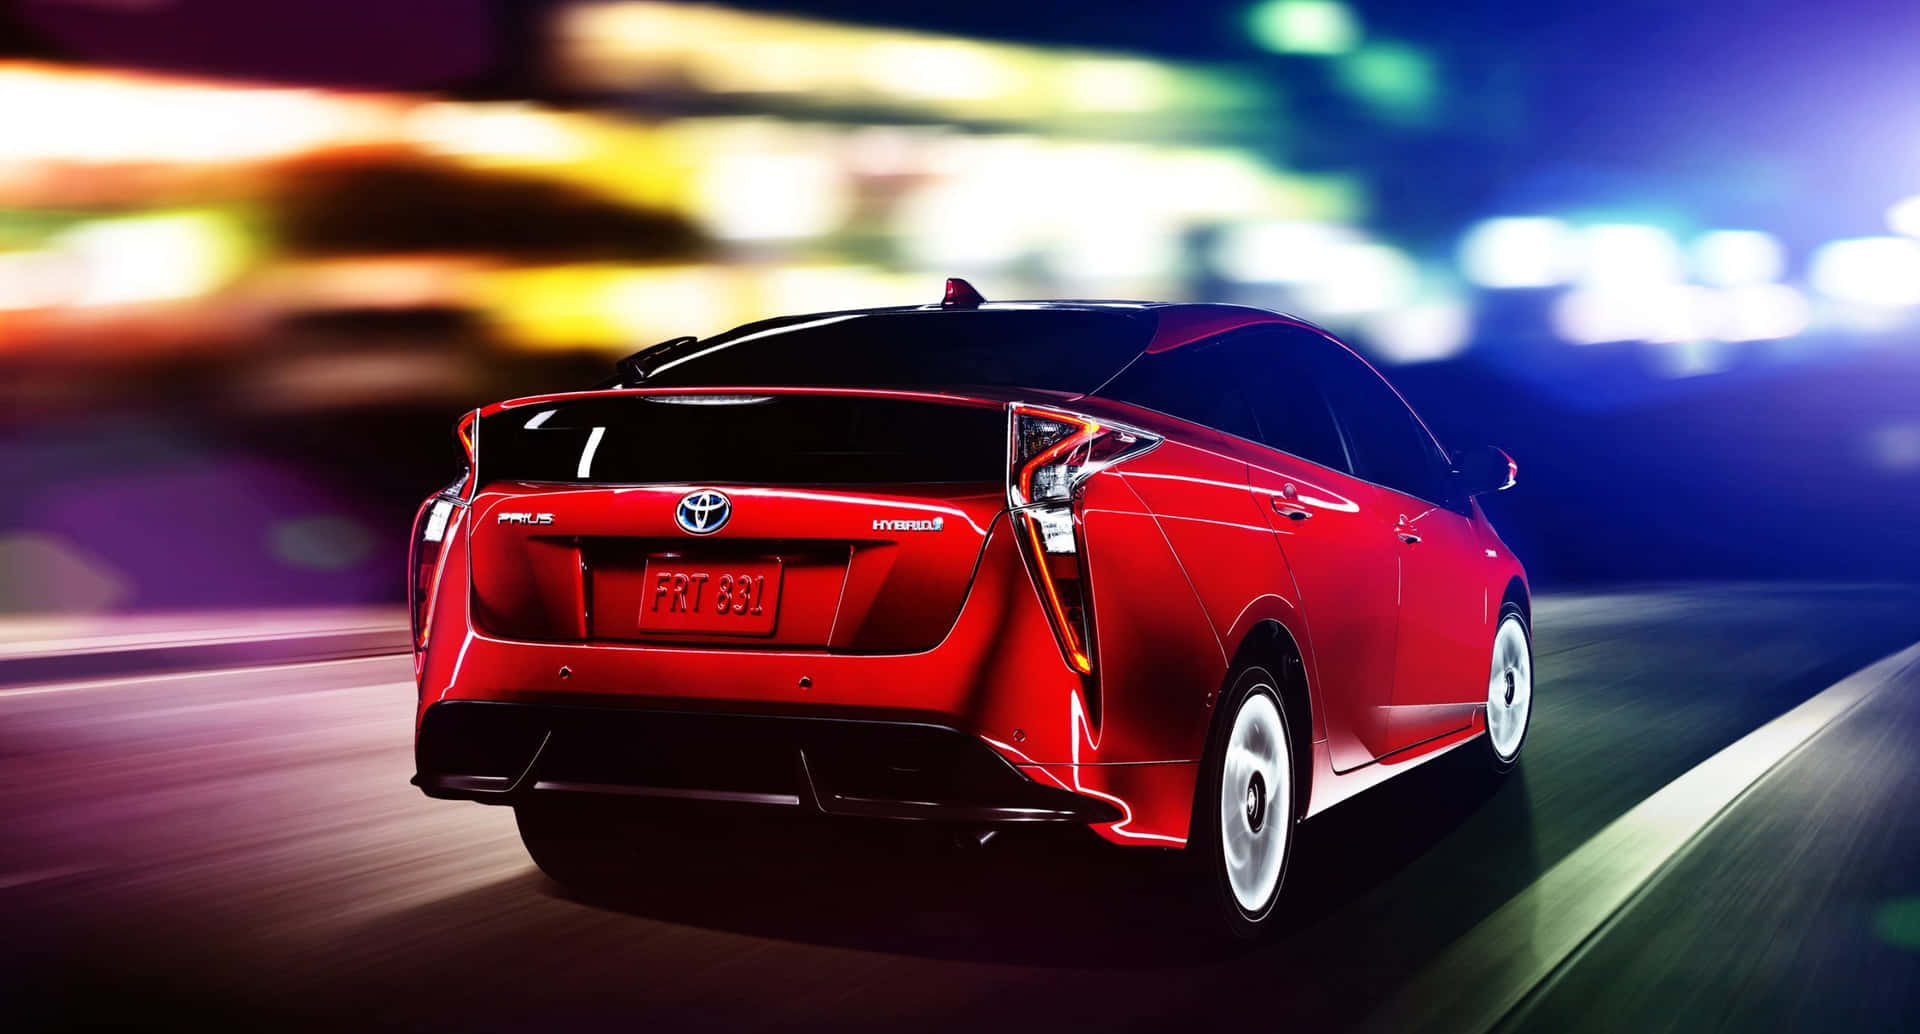 Caption: Innovative Eco-friendly Sedan: The Toyota Prius Wallpaper